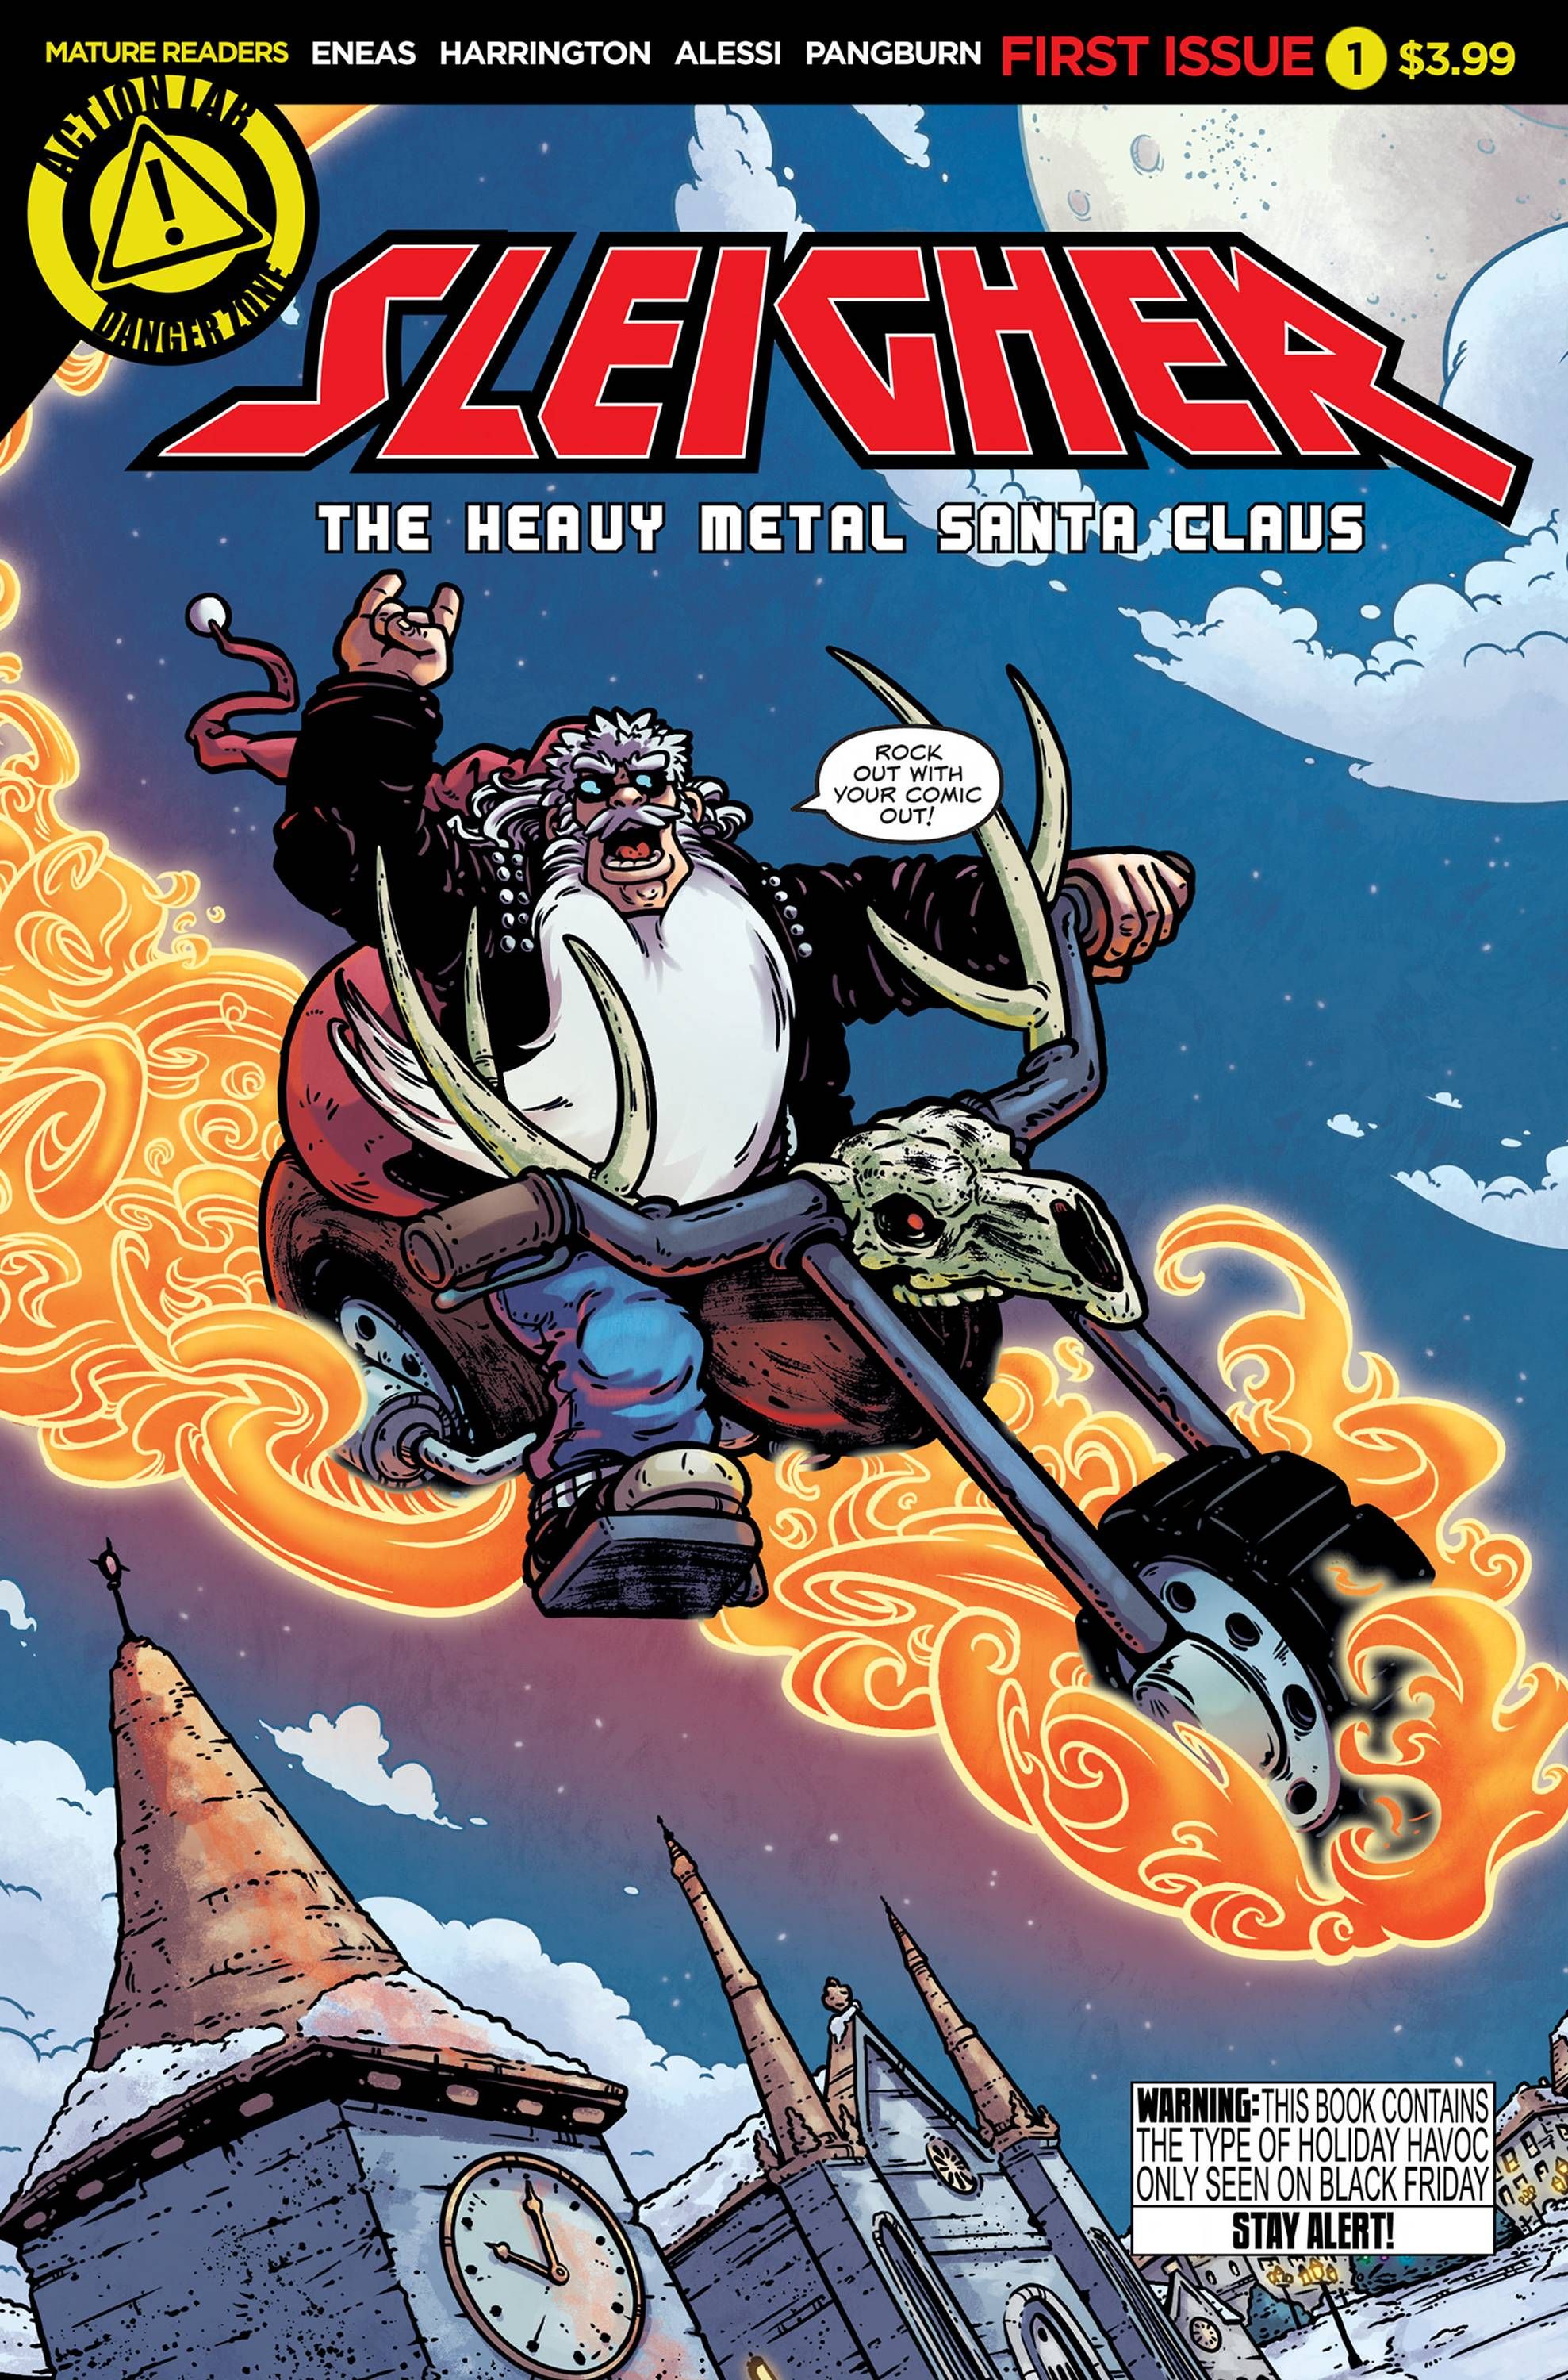 Sleigher: The Heavy Metal Santa Claus #1 Comic